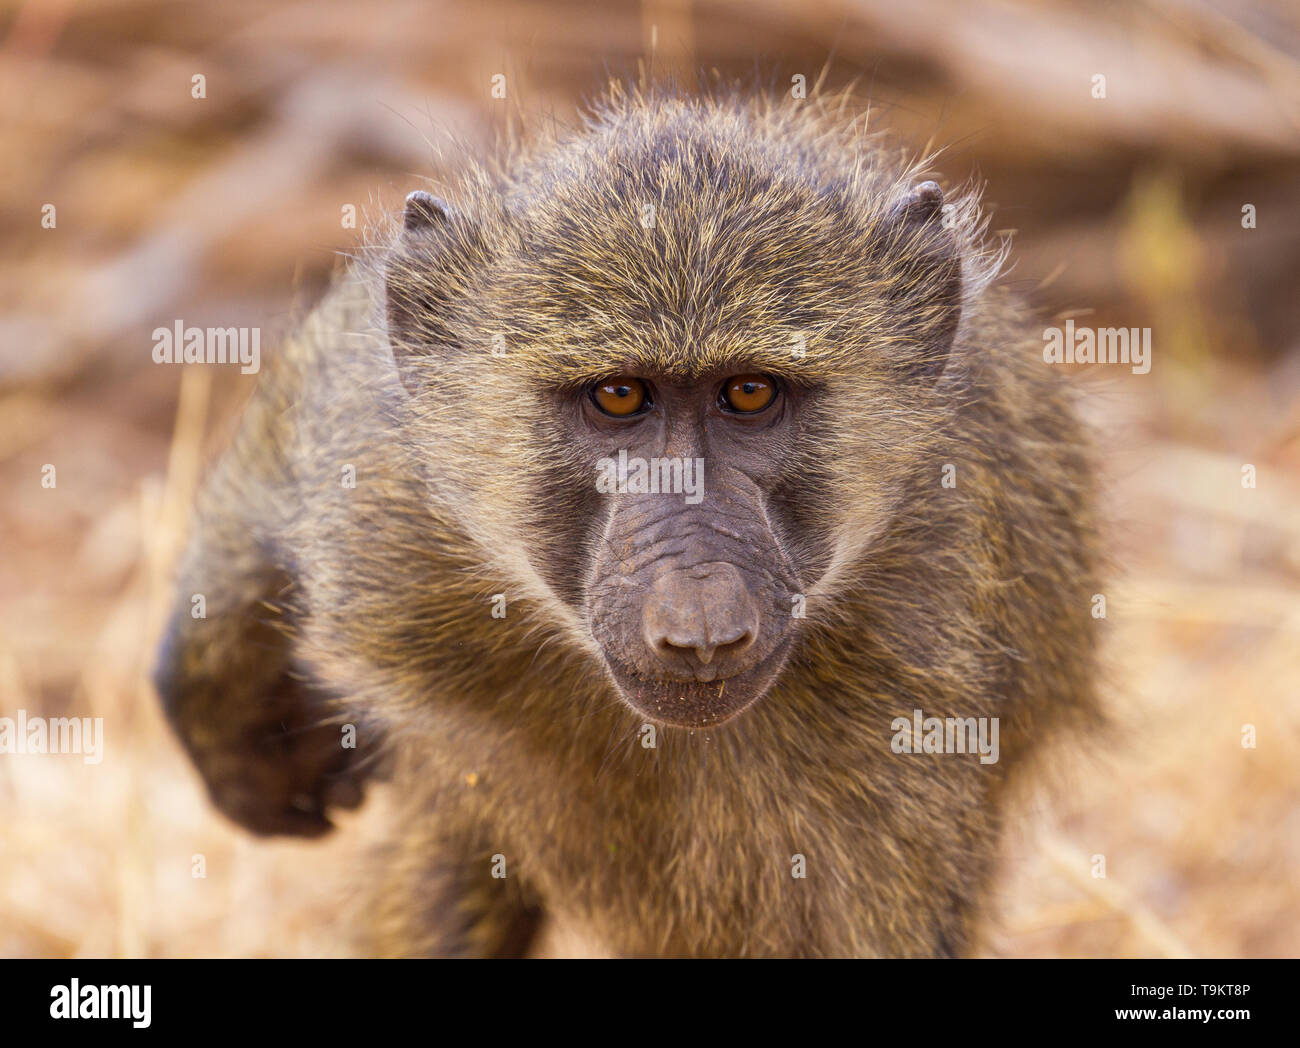 Close-up portrait face olive baboon, anubis baboon, Papio anubis, blurred backgroun, bright gold eyes, Samburu National Reserve, Kenya, East Africa Stock Photo